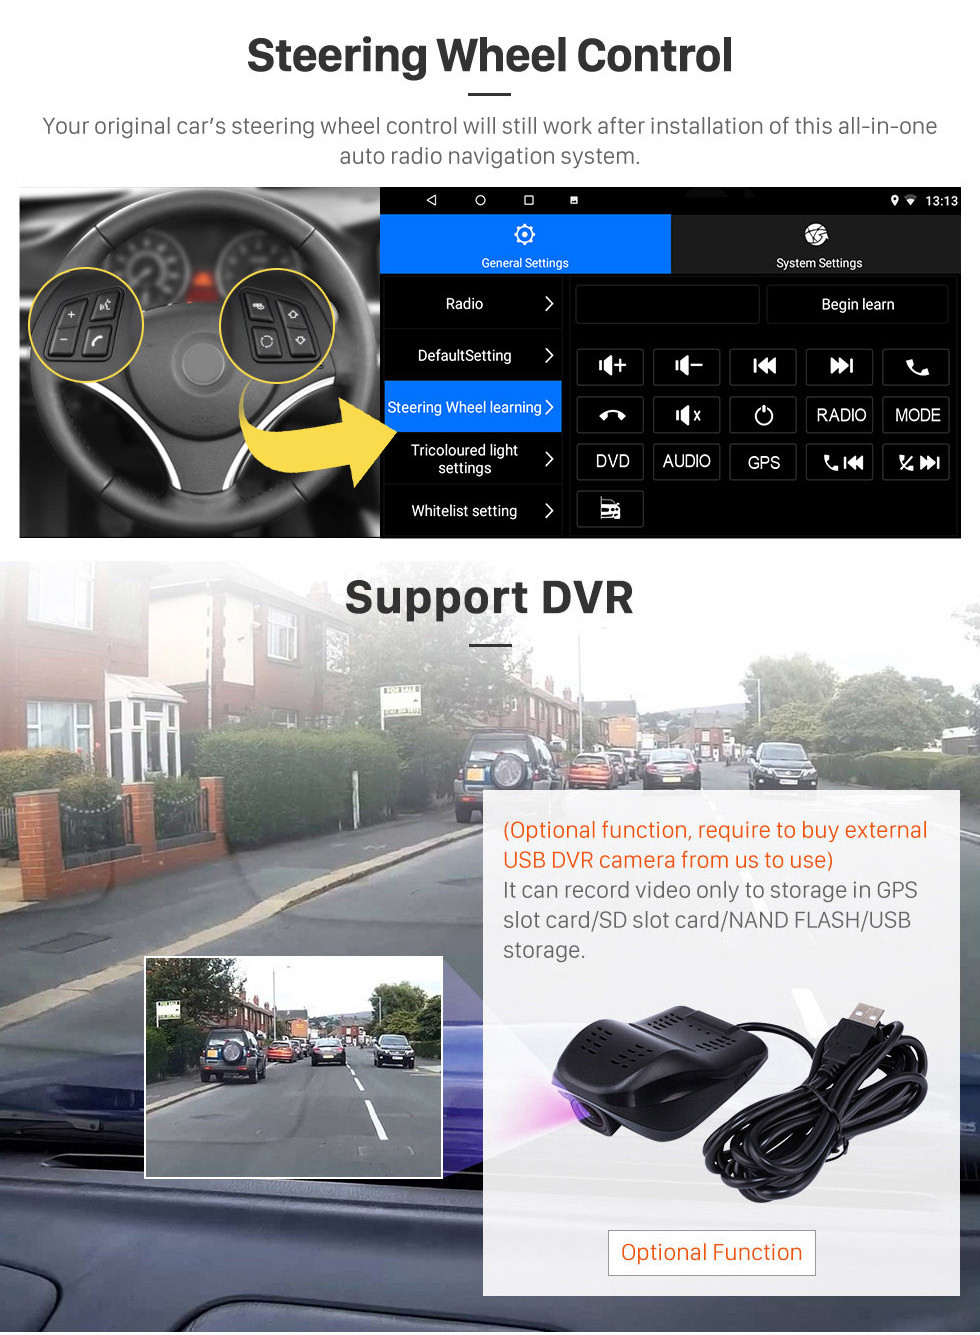 Seicane OEM 9 pulgadas Android 13.0 Radio para 2001-2008 Peugeot 307 Bluetooth WIFI HD Pantalla táctil con soporte de navegación GPS Carplay DVR OBD cámara de visión trasera